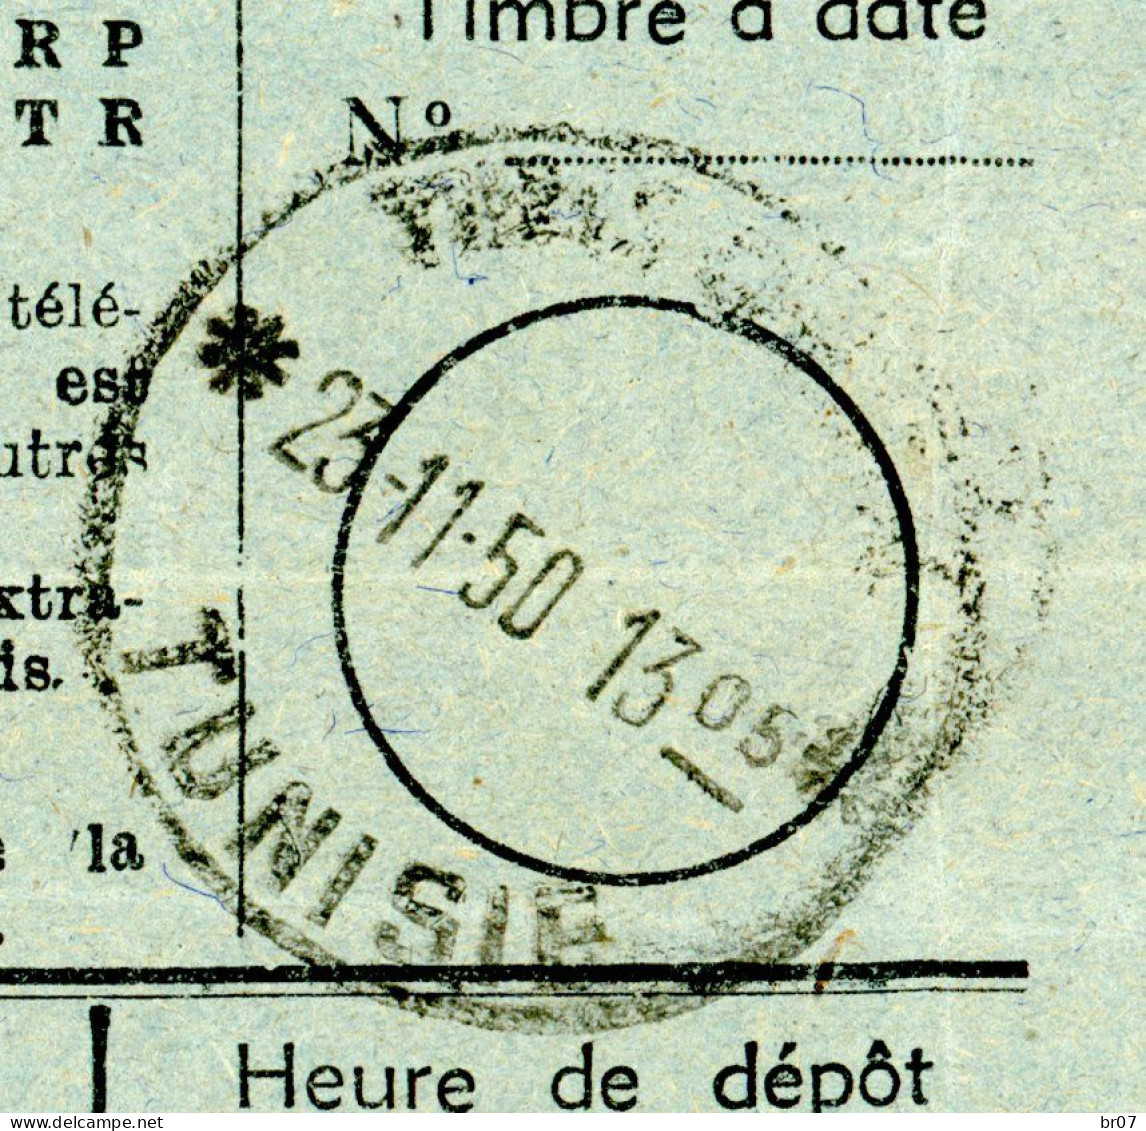 TUNISIE TELEGRAMME DE CONSTANTINE 1950 TUNIS CENTRAL - Storia Postale